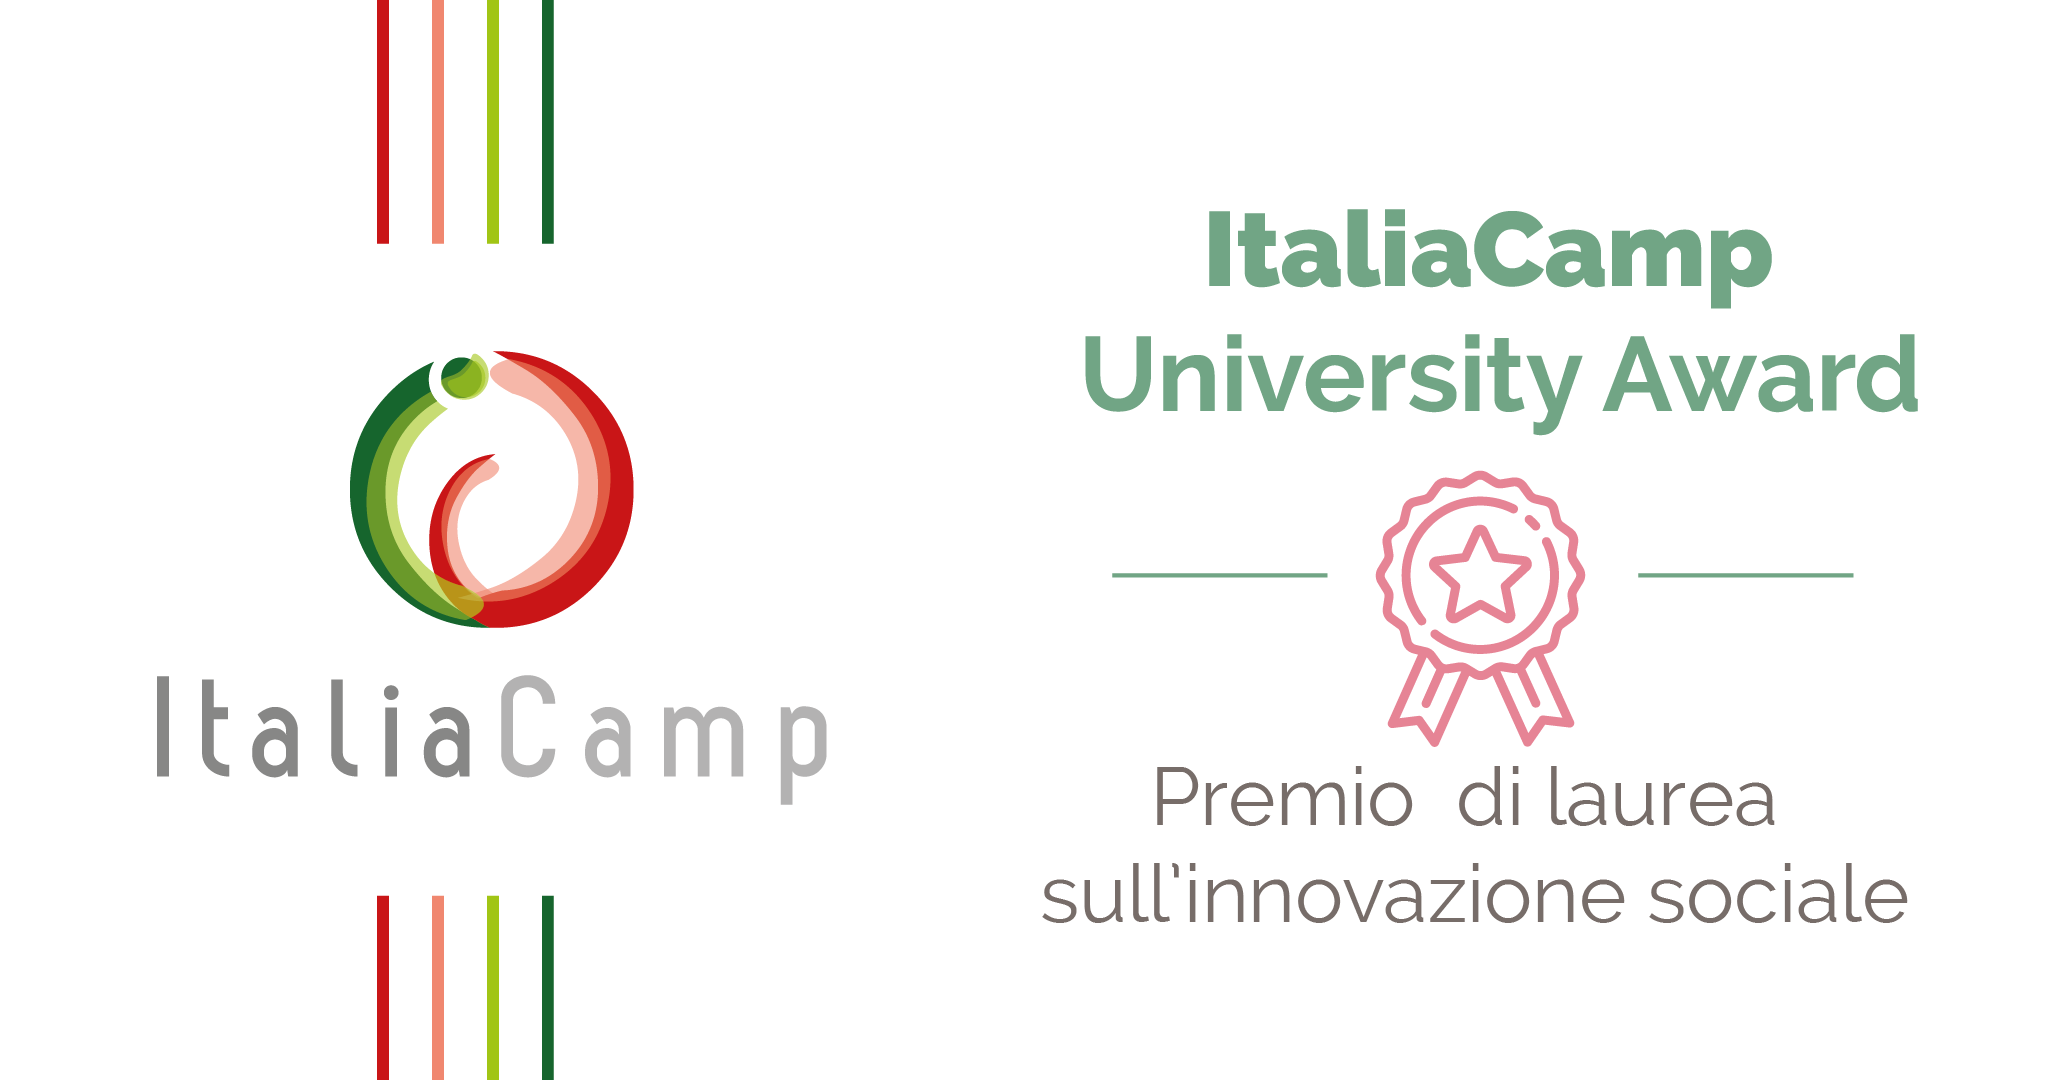 ItaliaCamp University Award